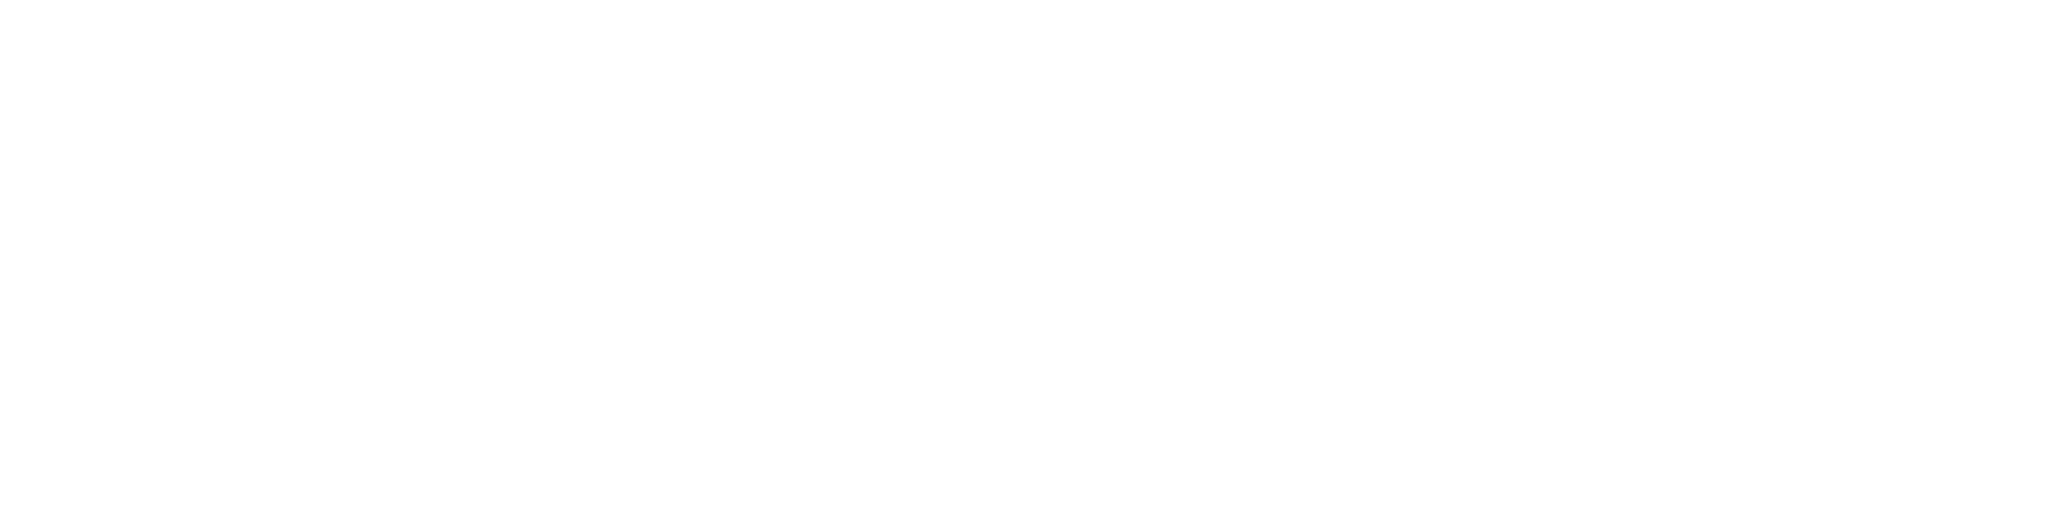 the mane-01